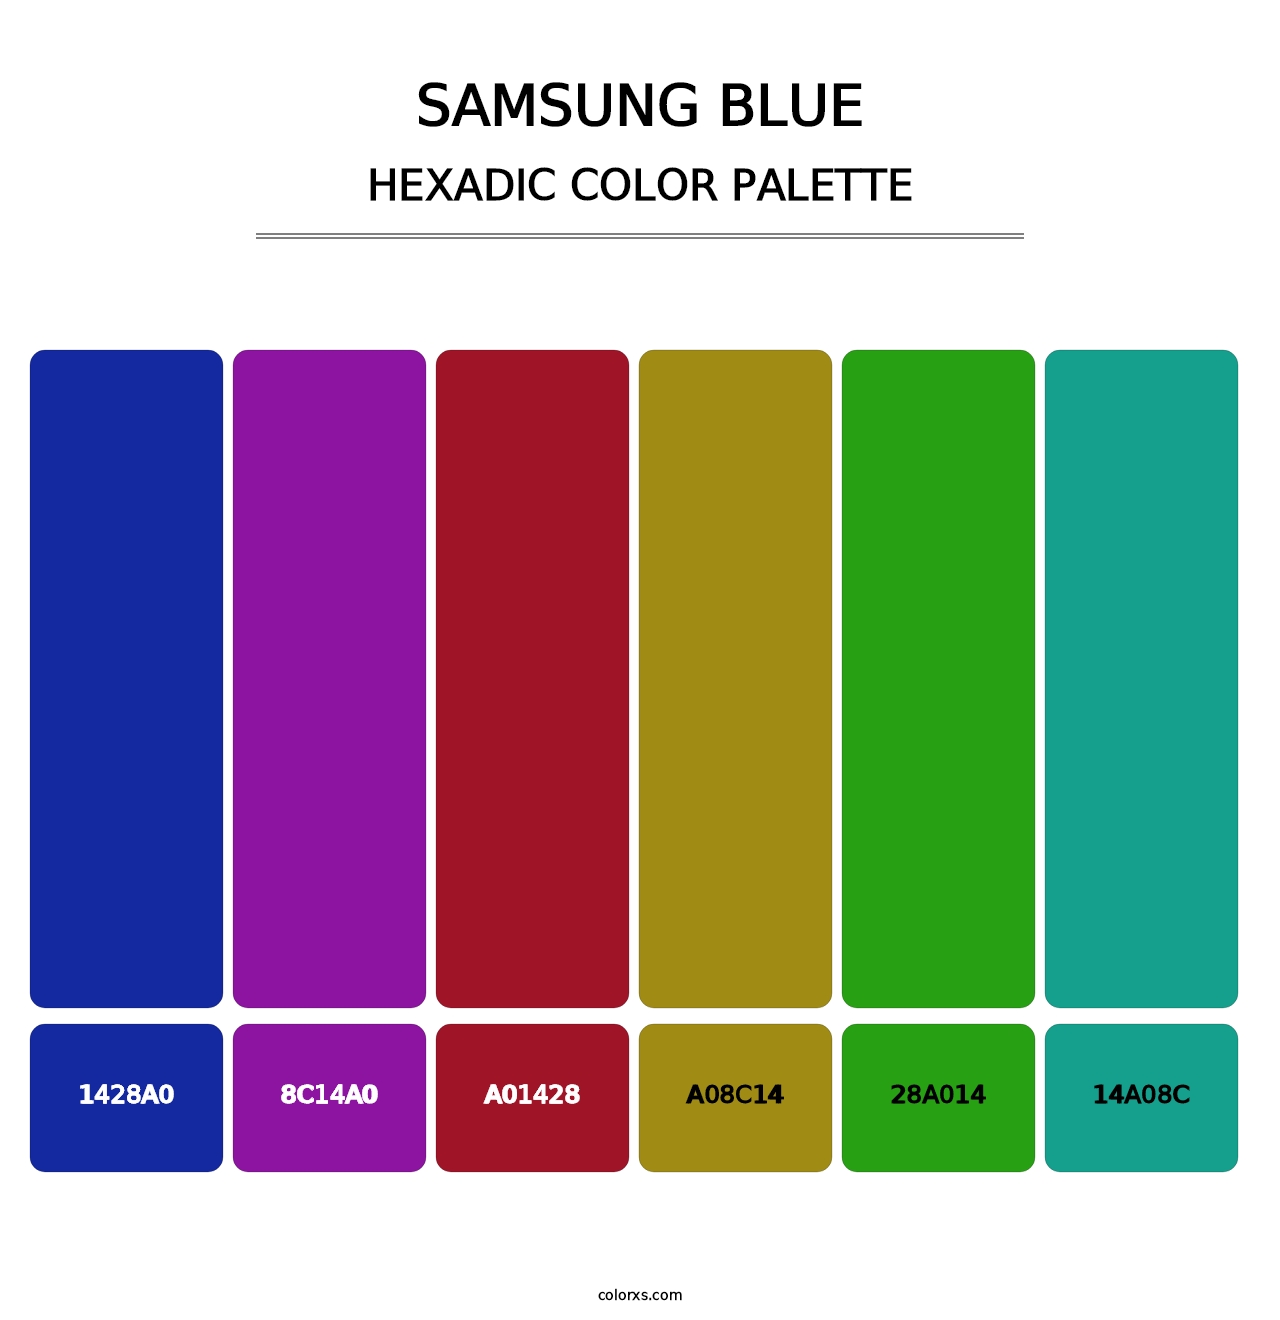 Samsung Blue - Hexadic Color Palette